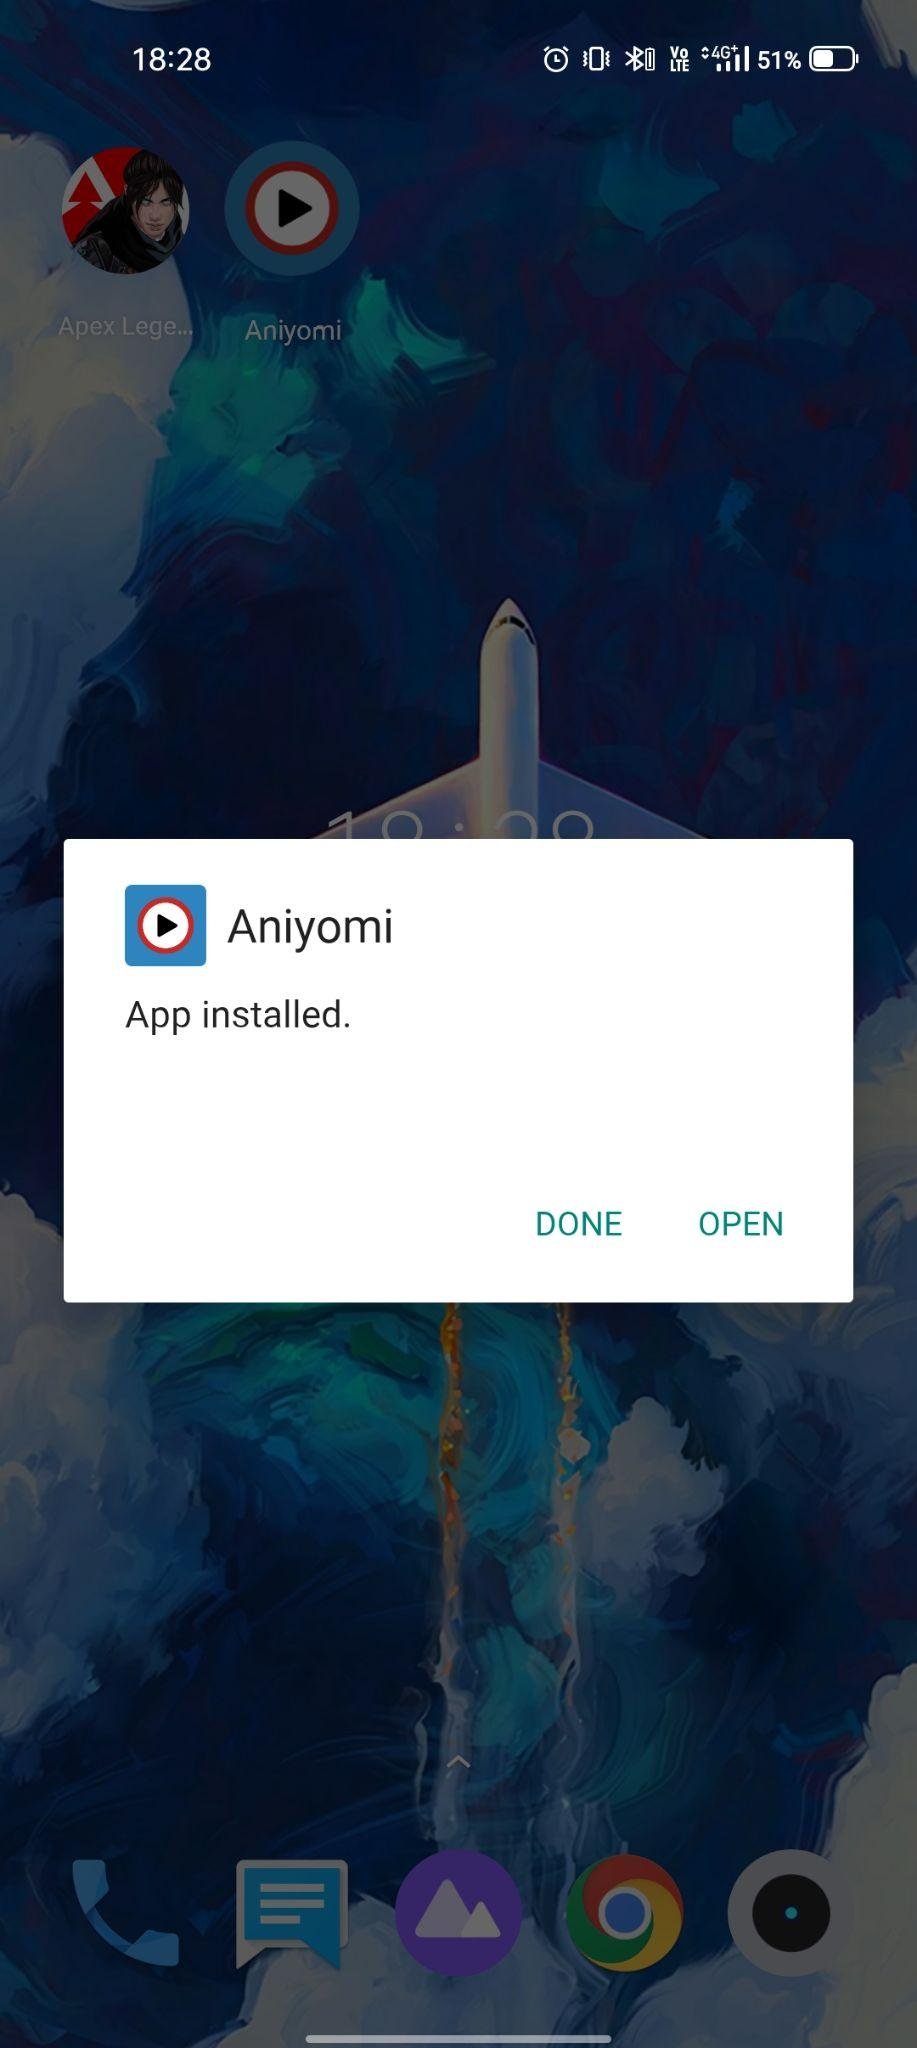 Aniyomi apk installed